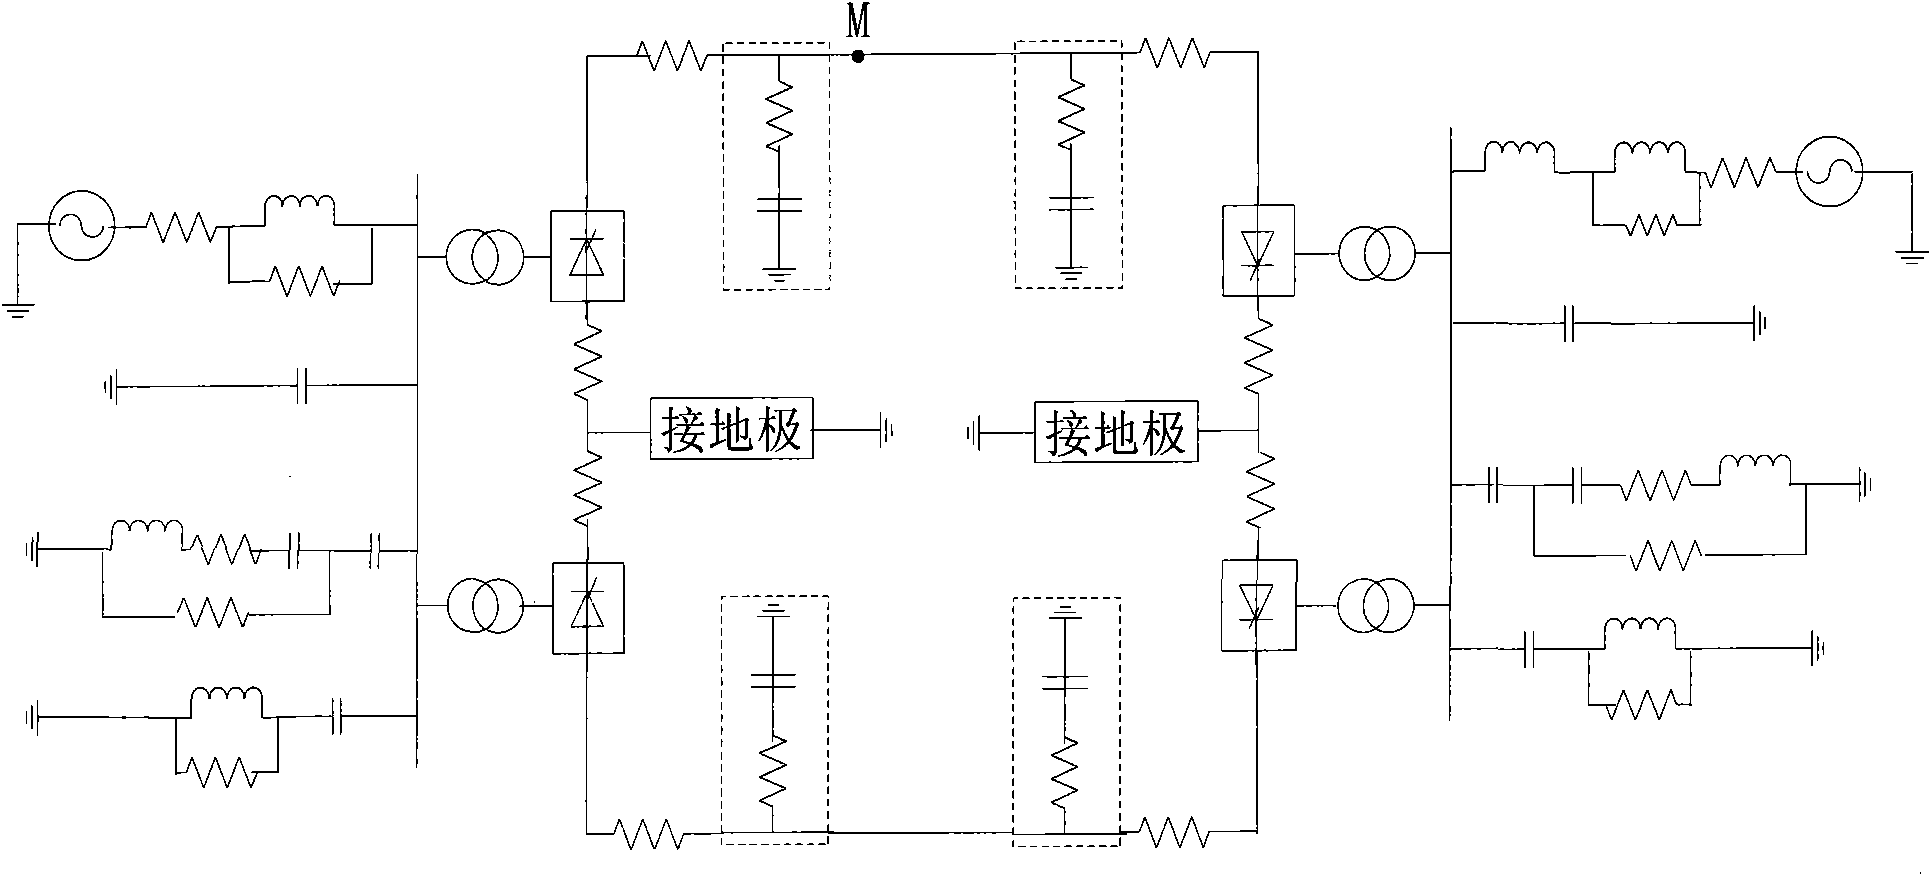 Internal and external fault recognition method based on entropy of information for extra-high voltage (EHV) direct current electric transmission line